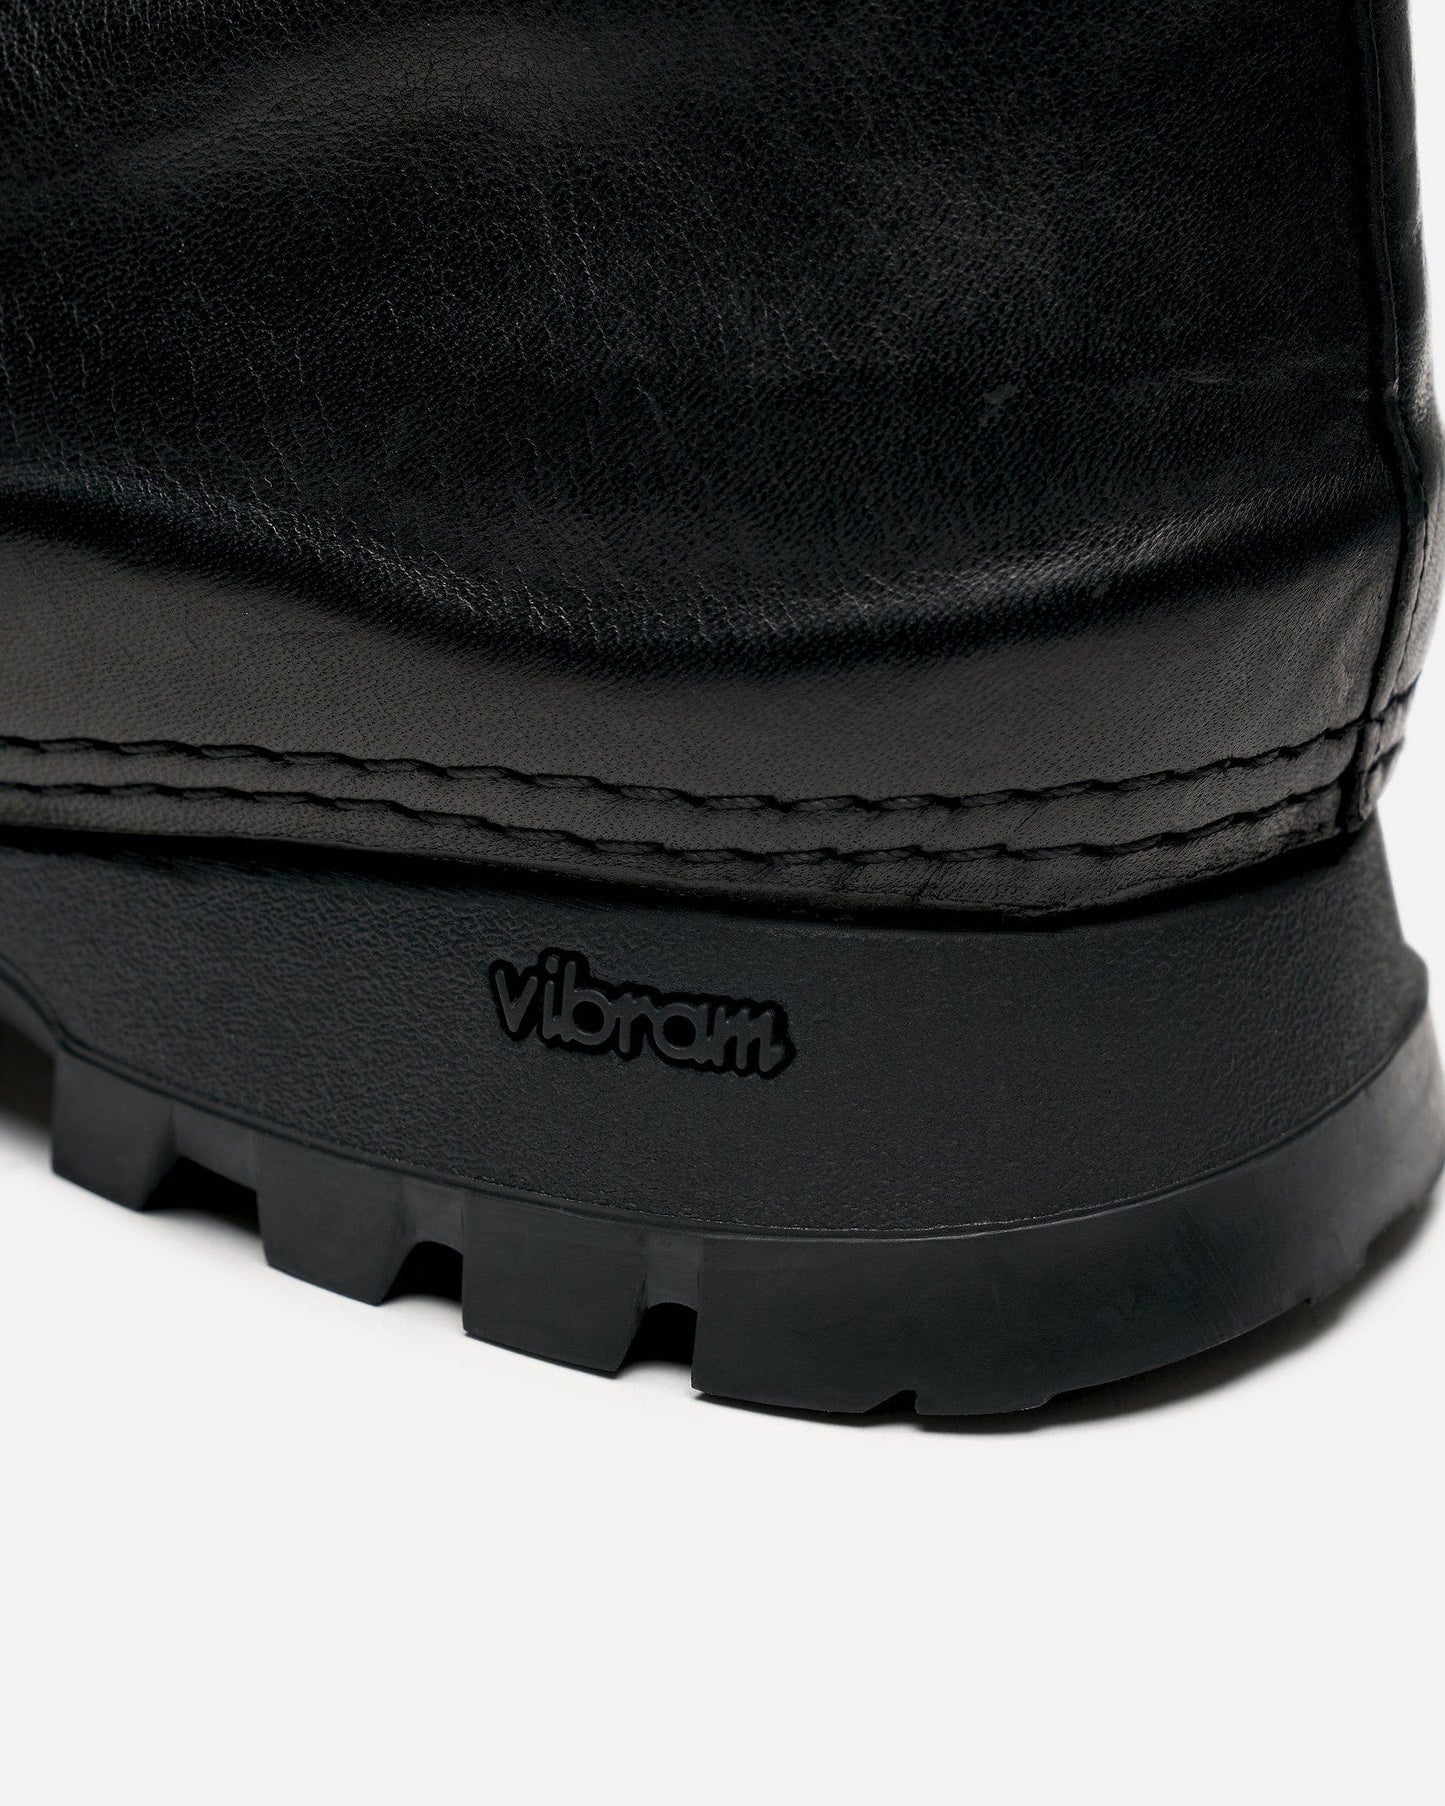 Guidi Men's Boots VS01 Full Grain Soft Horse Leather Boots in Black